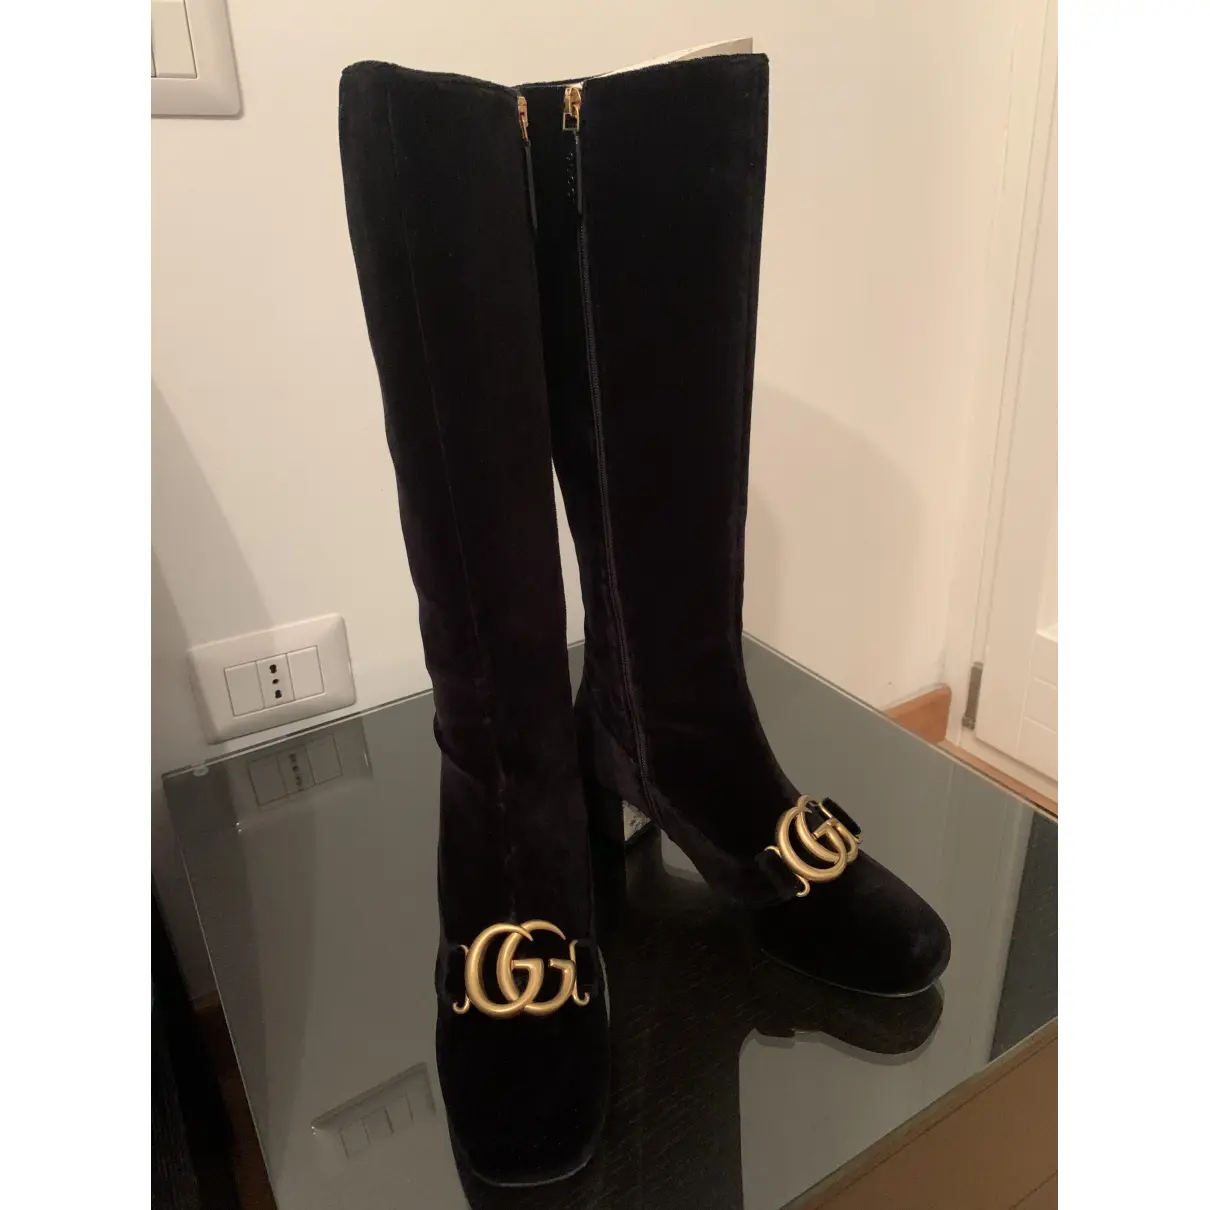 Buy Gucci Marmont velvet boots online